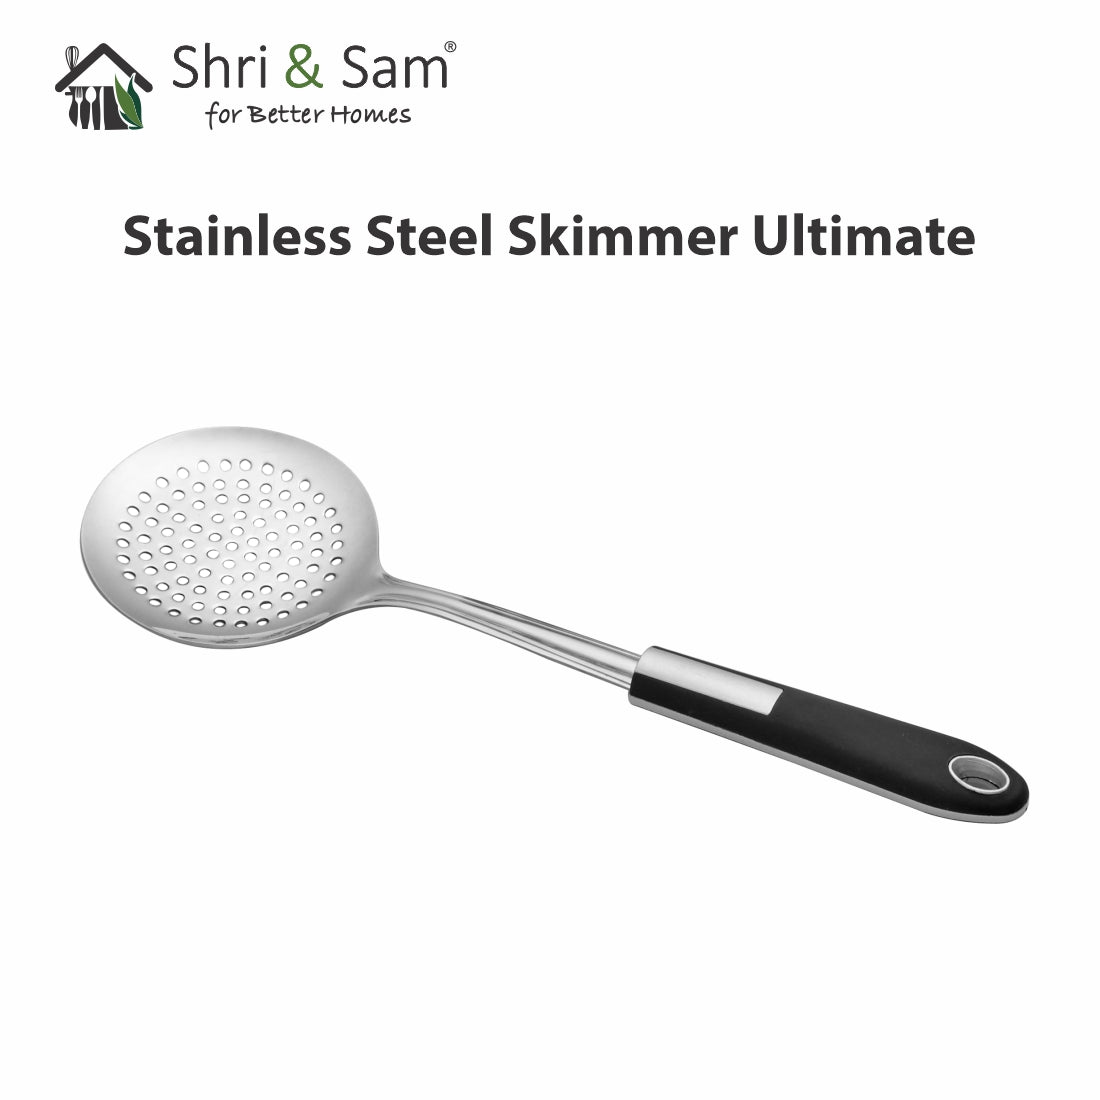 Stainless Steel Skimmer Ultimate